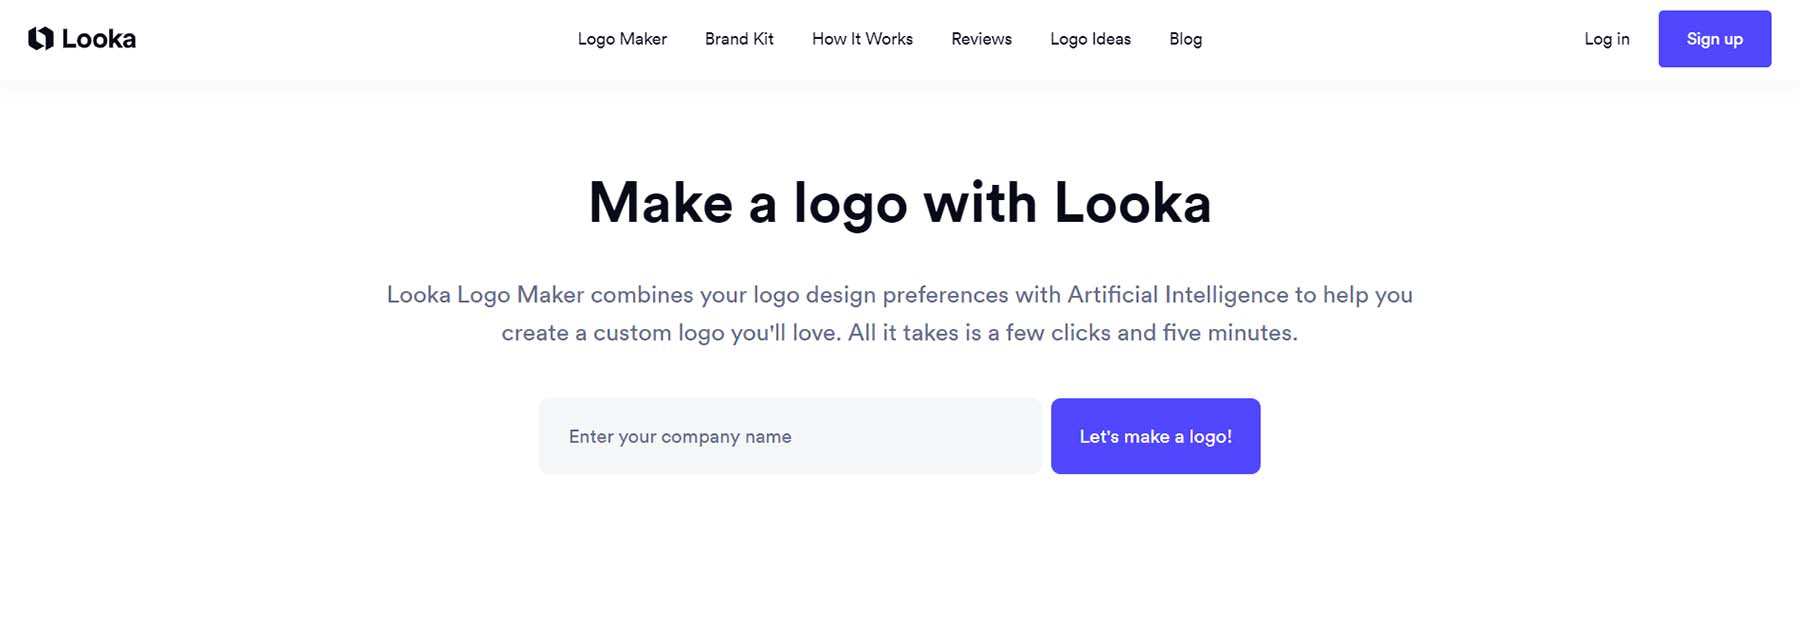 Feedback on my Logos - Art Design Support - Developer Forum